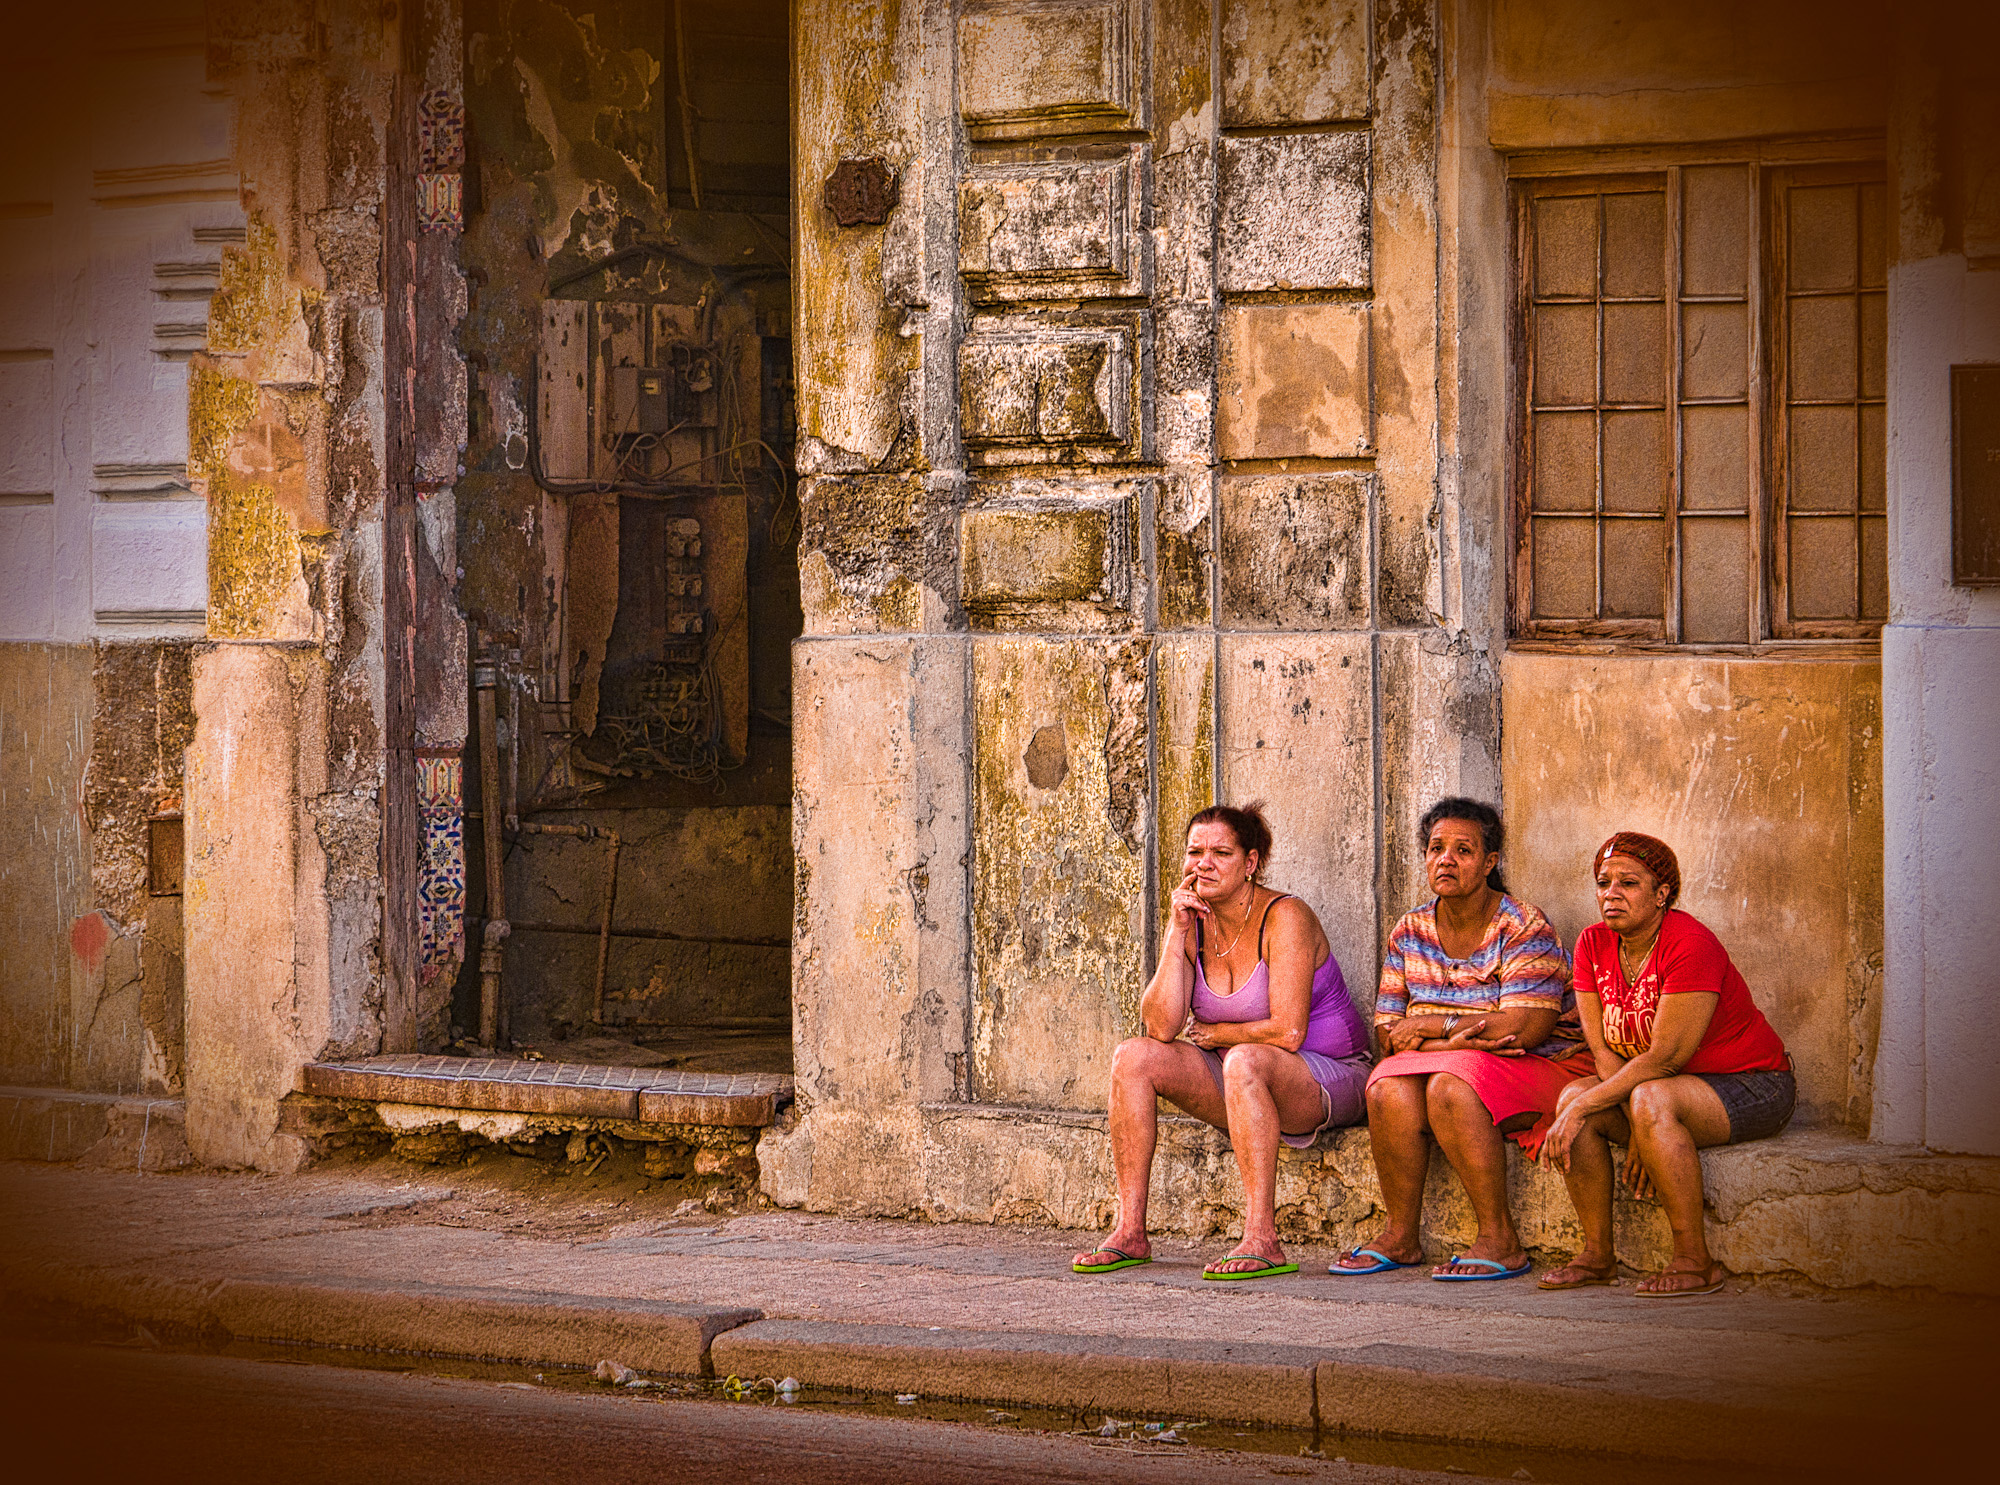 Bill_Barnett_Cuban Women on Street.jpg